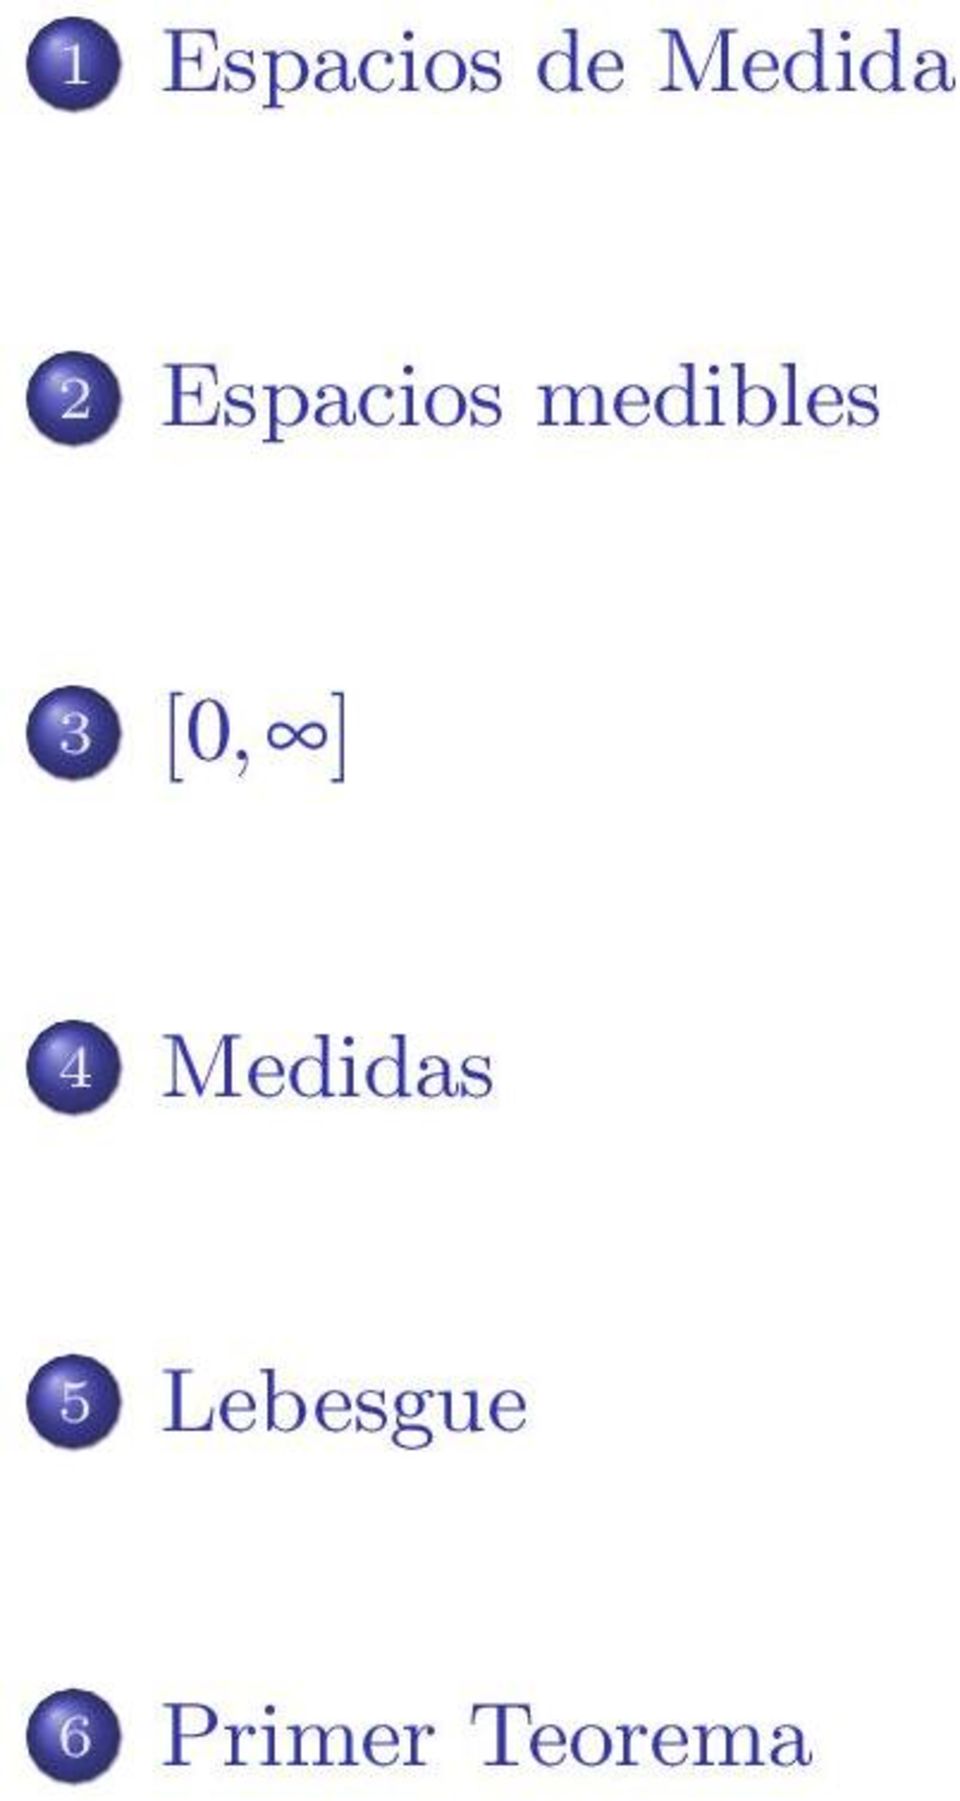 [0, ] 4 Medidas 5